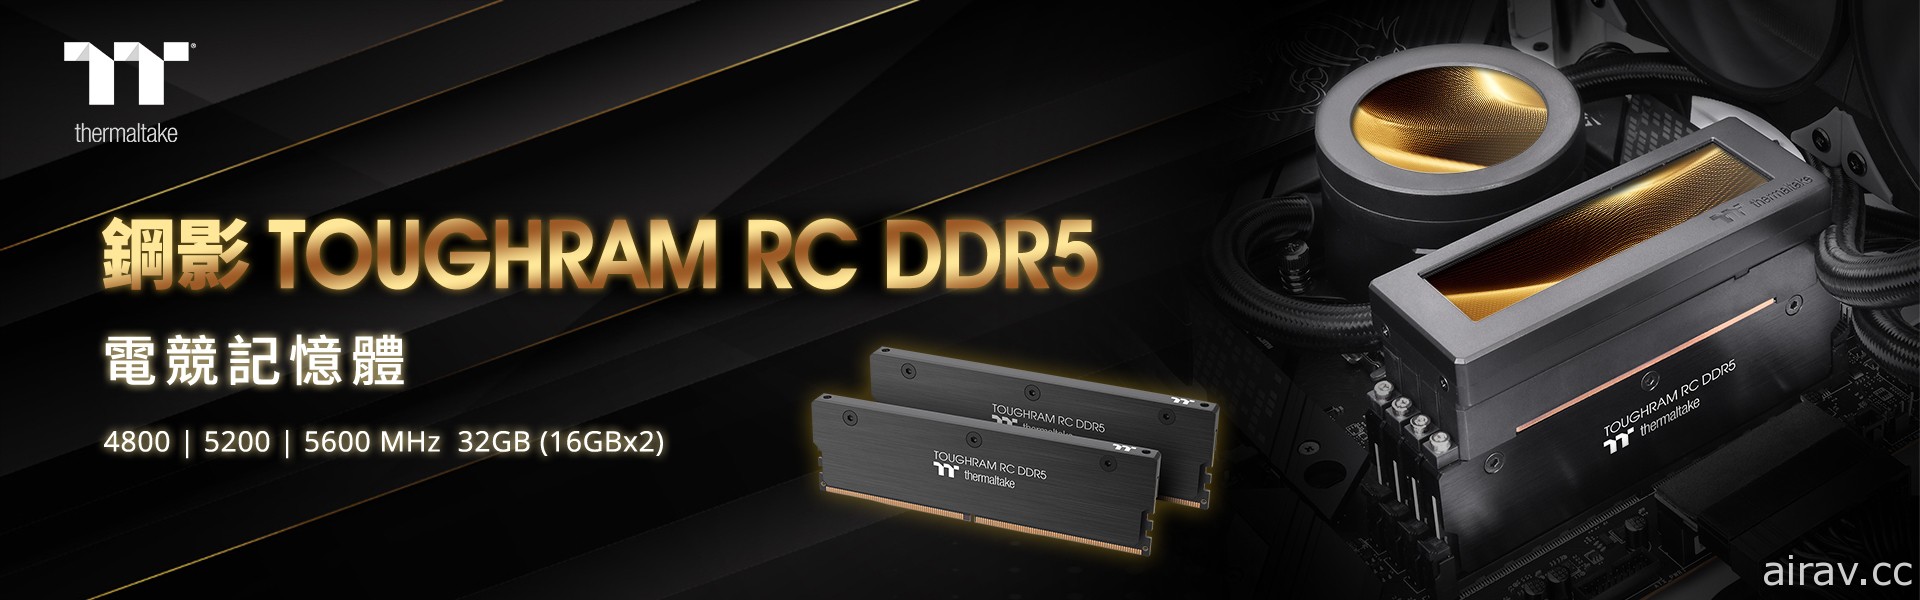 曜越推出钢影 TOUGHRAM RC DDR5 内存